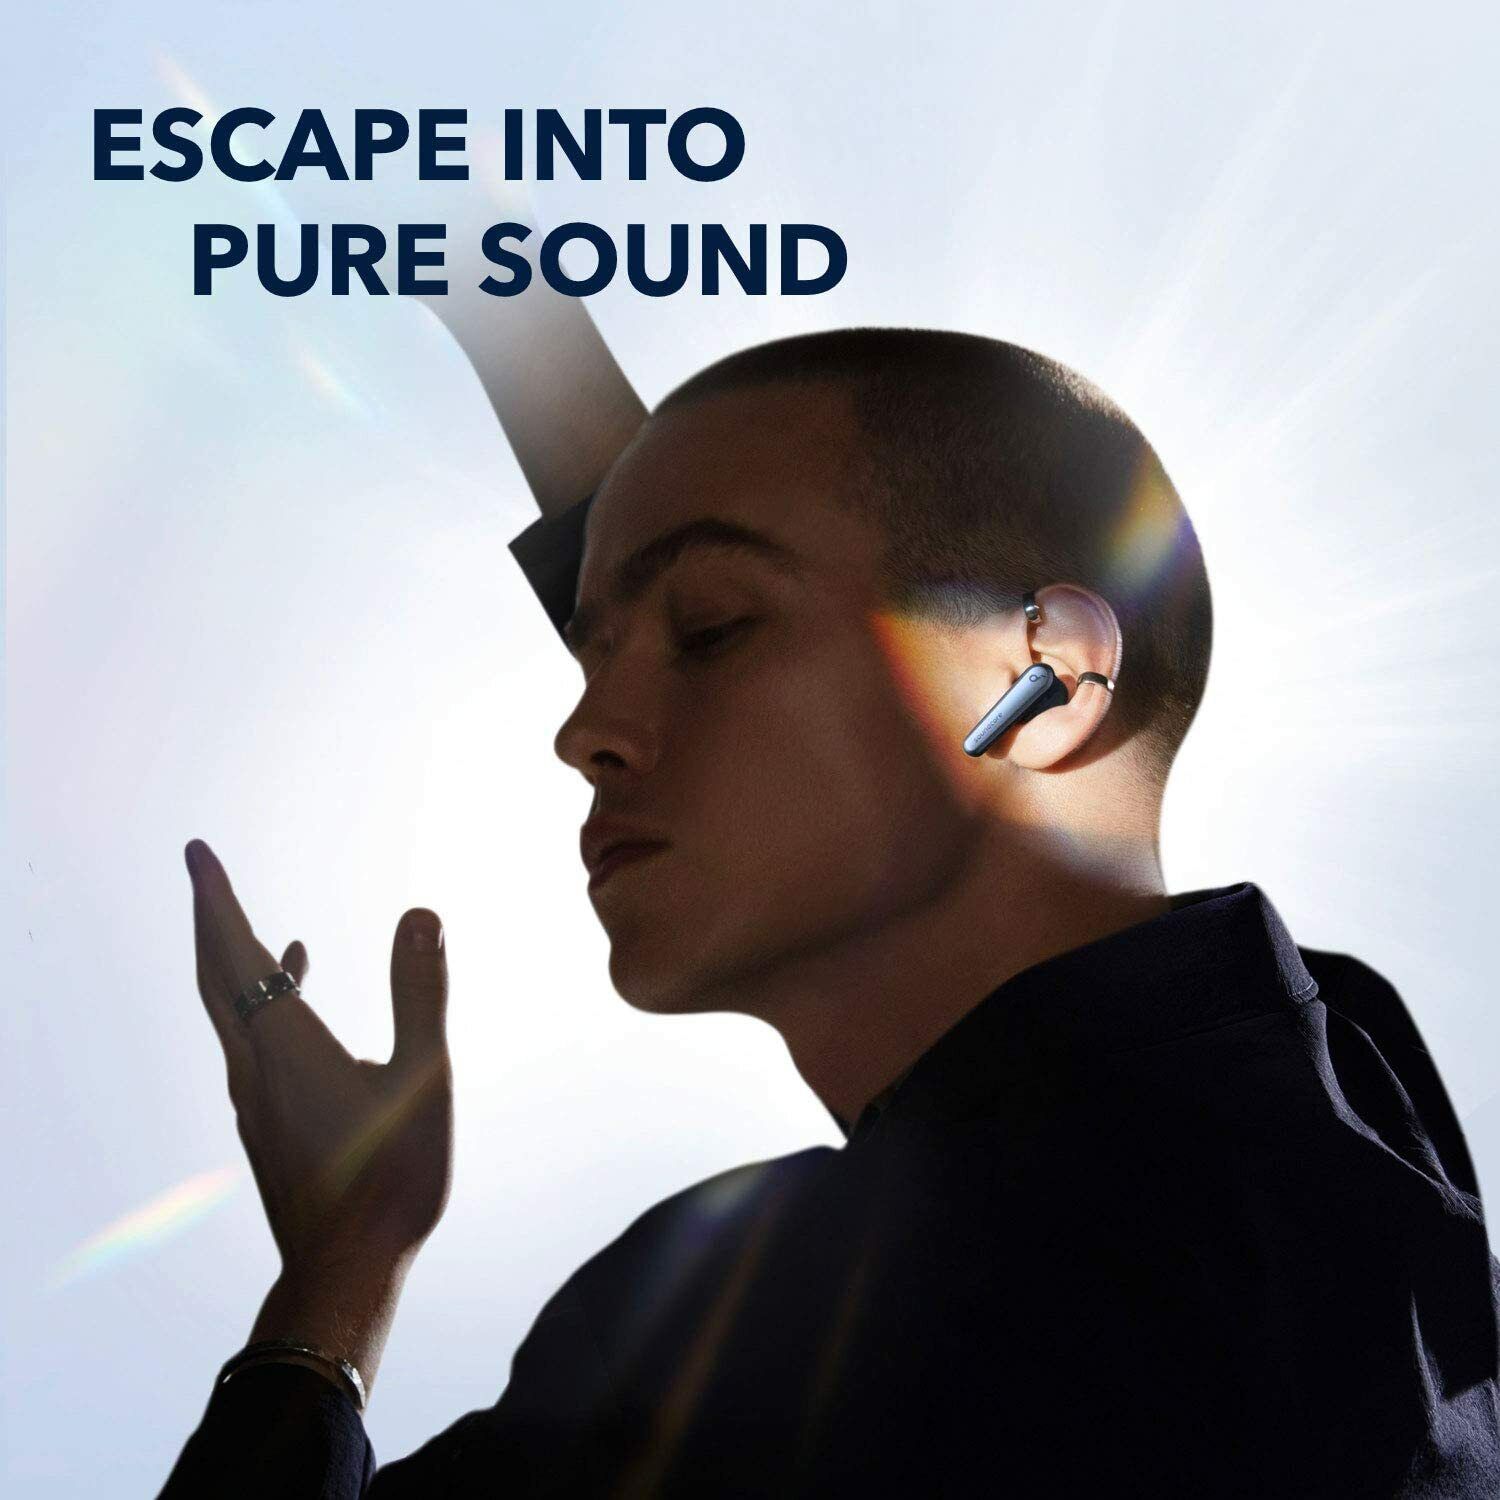 Soundcore Liberty Air 2 Pro True Wireless Earbuds